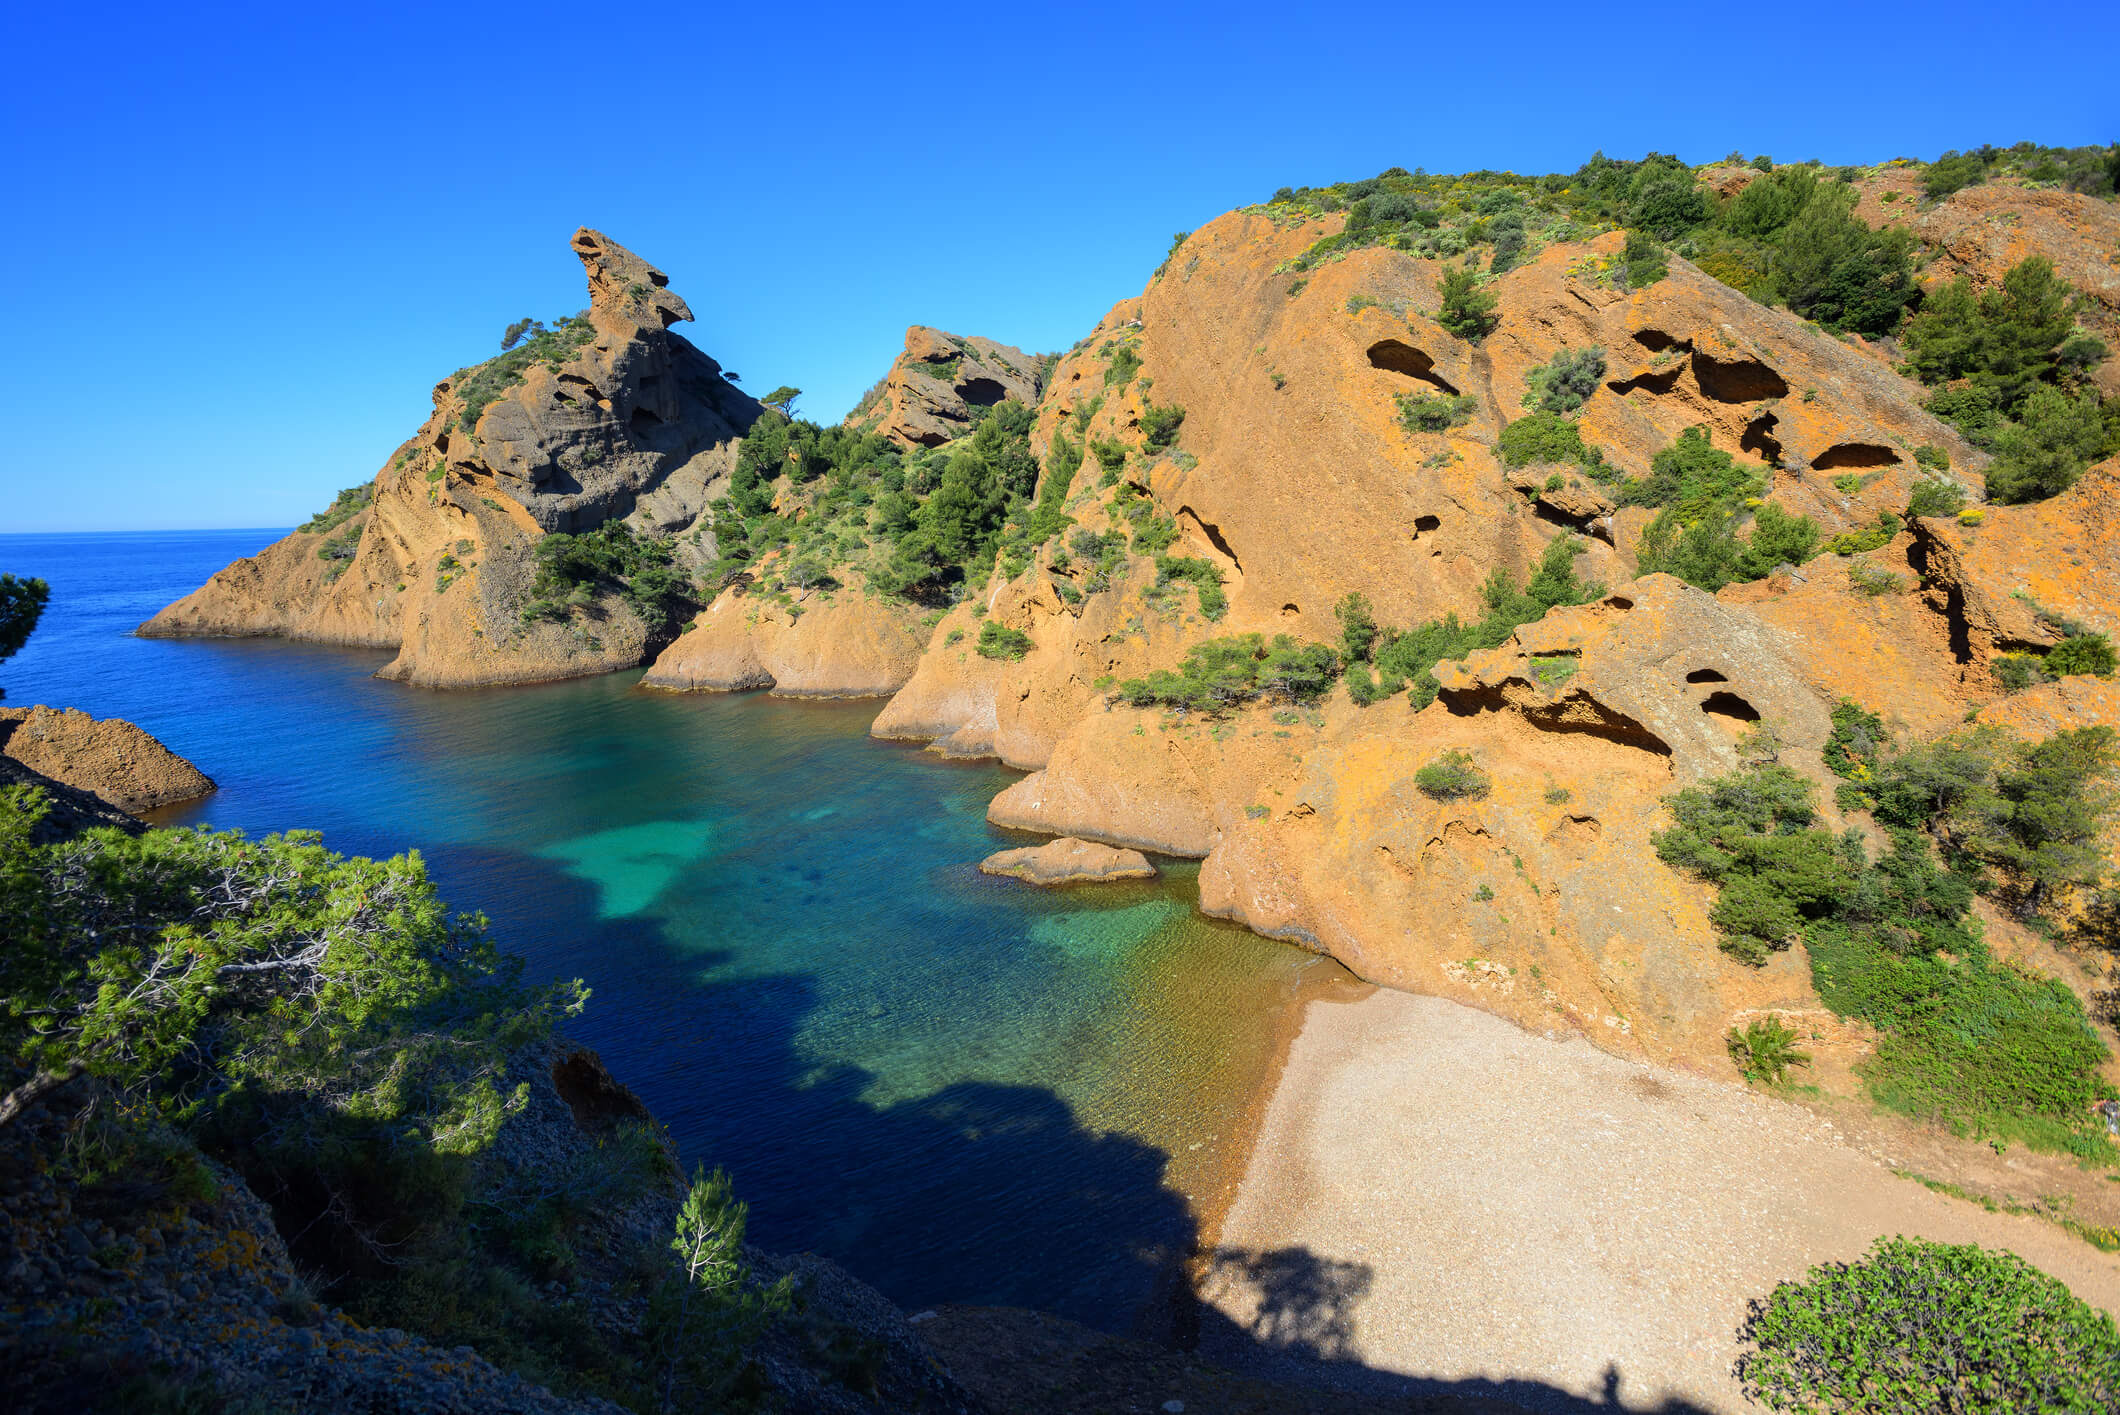 Calanque de Figuerolles near Marseilles with distinctive rock "The Lion", blue water lagoon and beautiful beach, La Ciotat, Provence, France